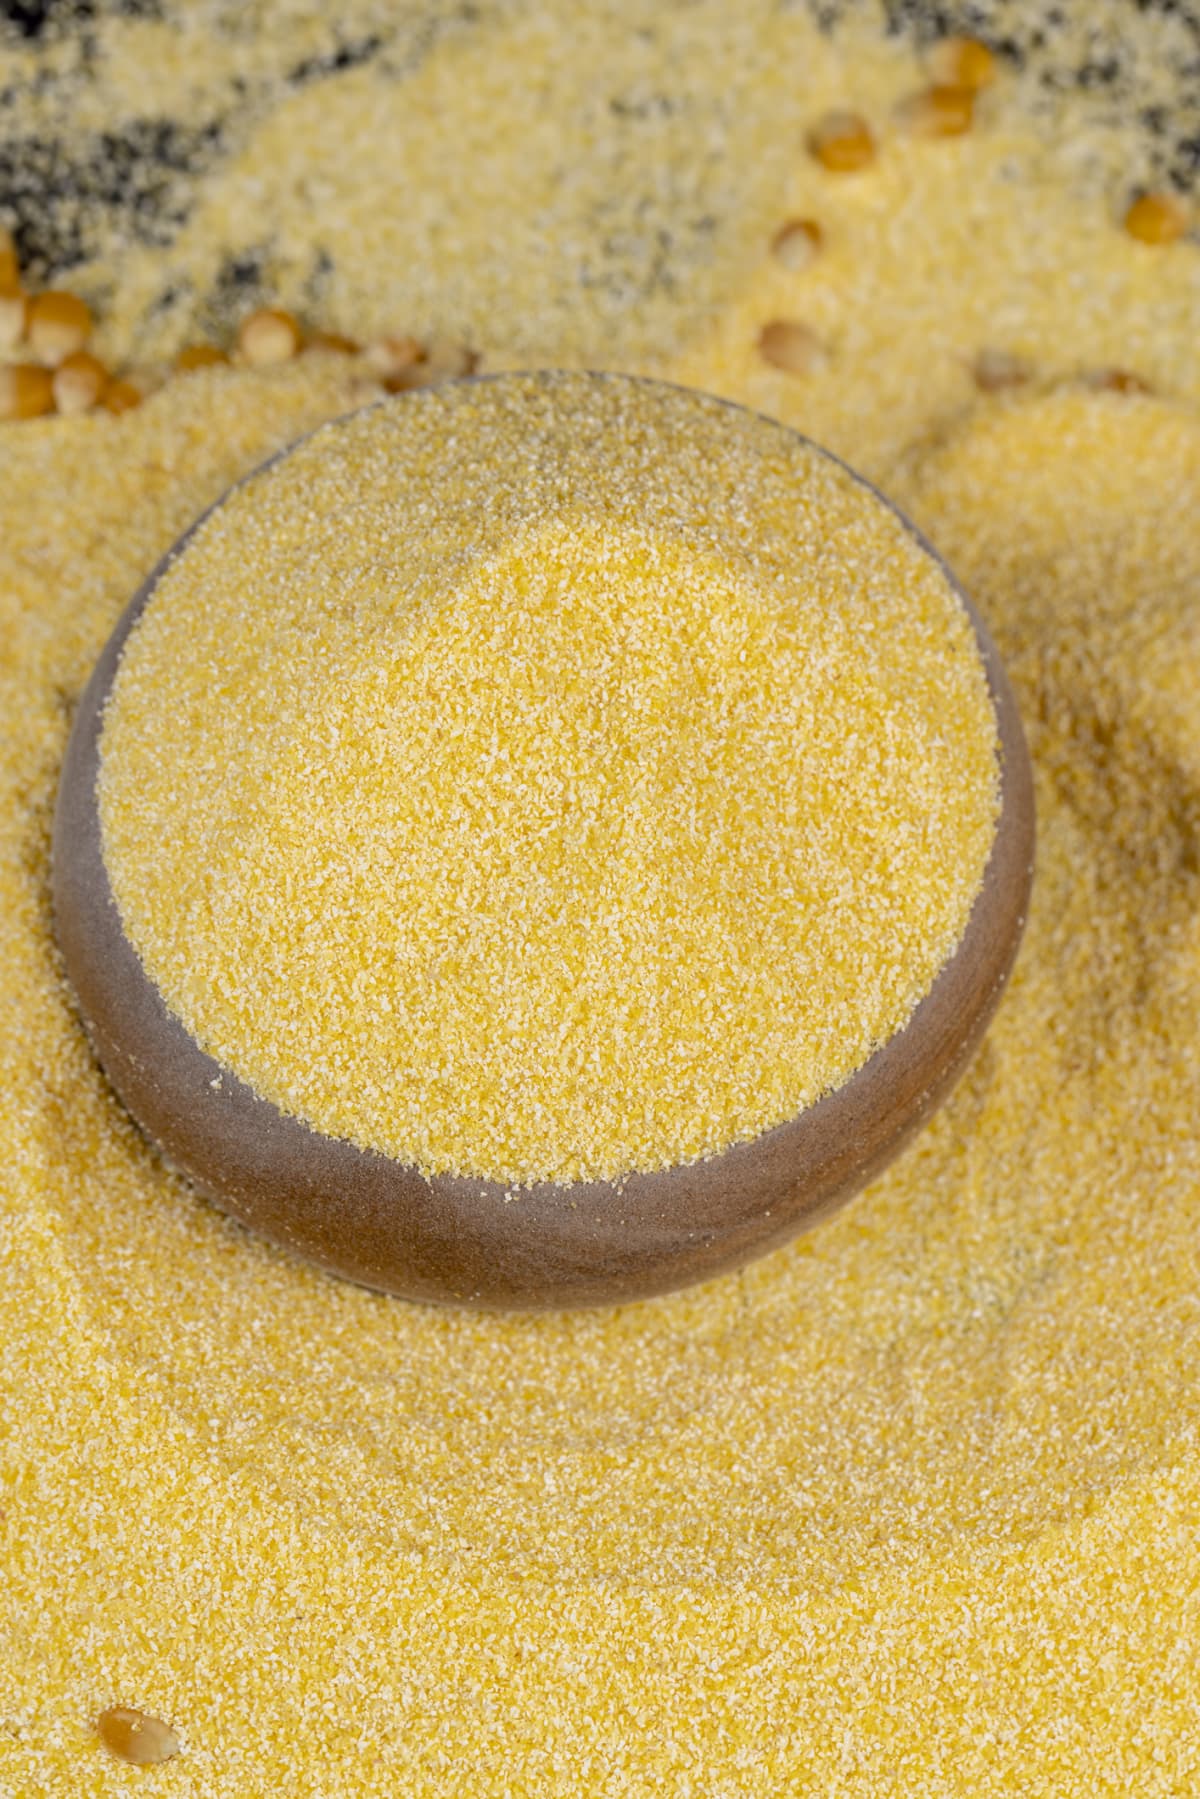 yellow corn grain flour for cooking polenta porridge, dry yellow polenta porridge close-up